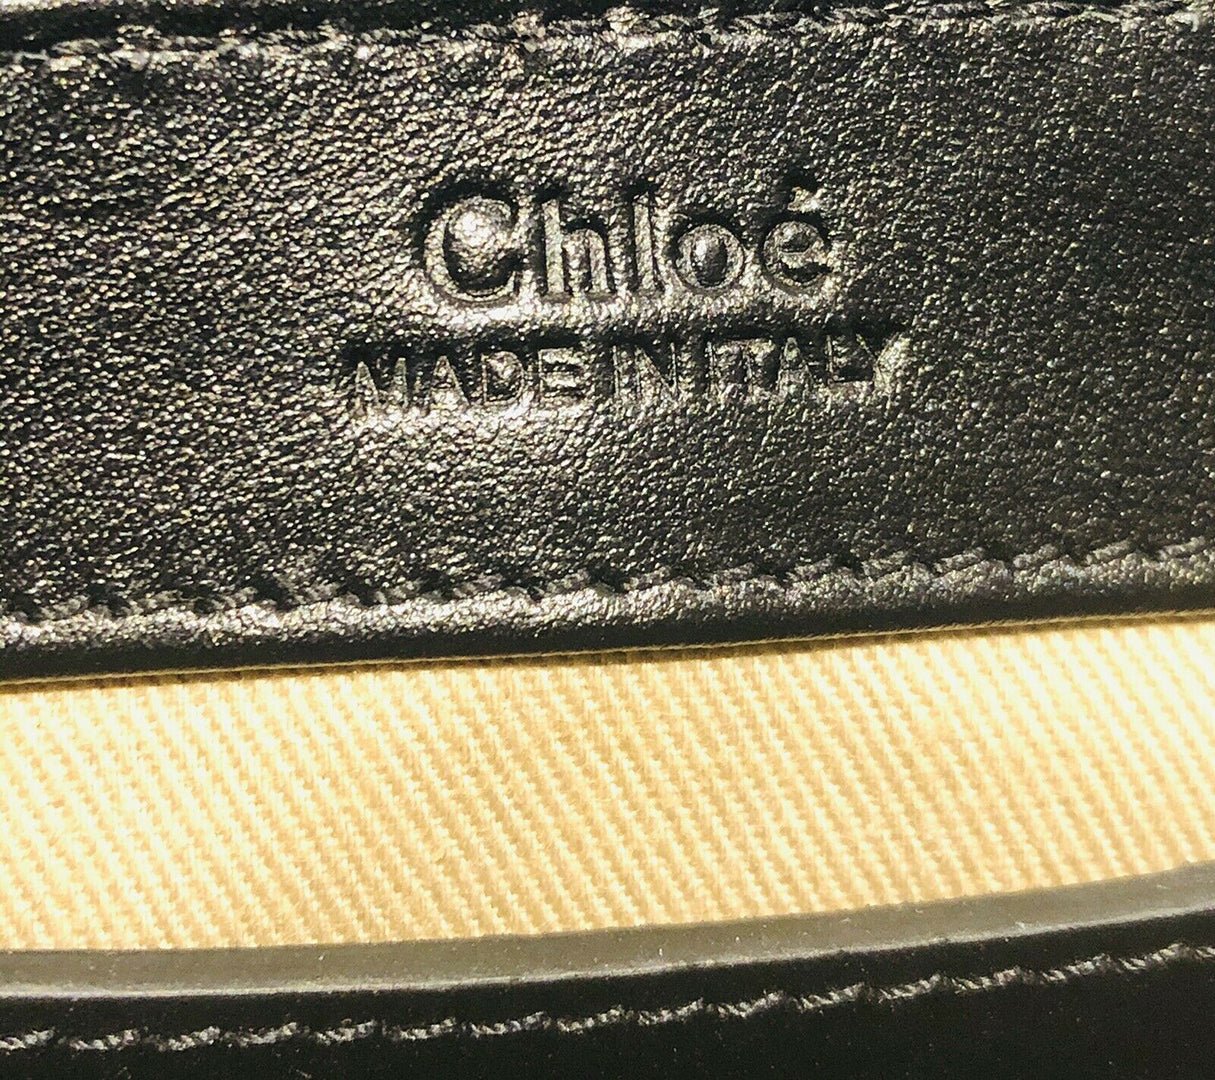 CHLOE C Metallic Gold Leather Mini Crossbody Bag